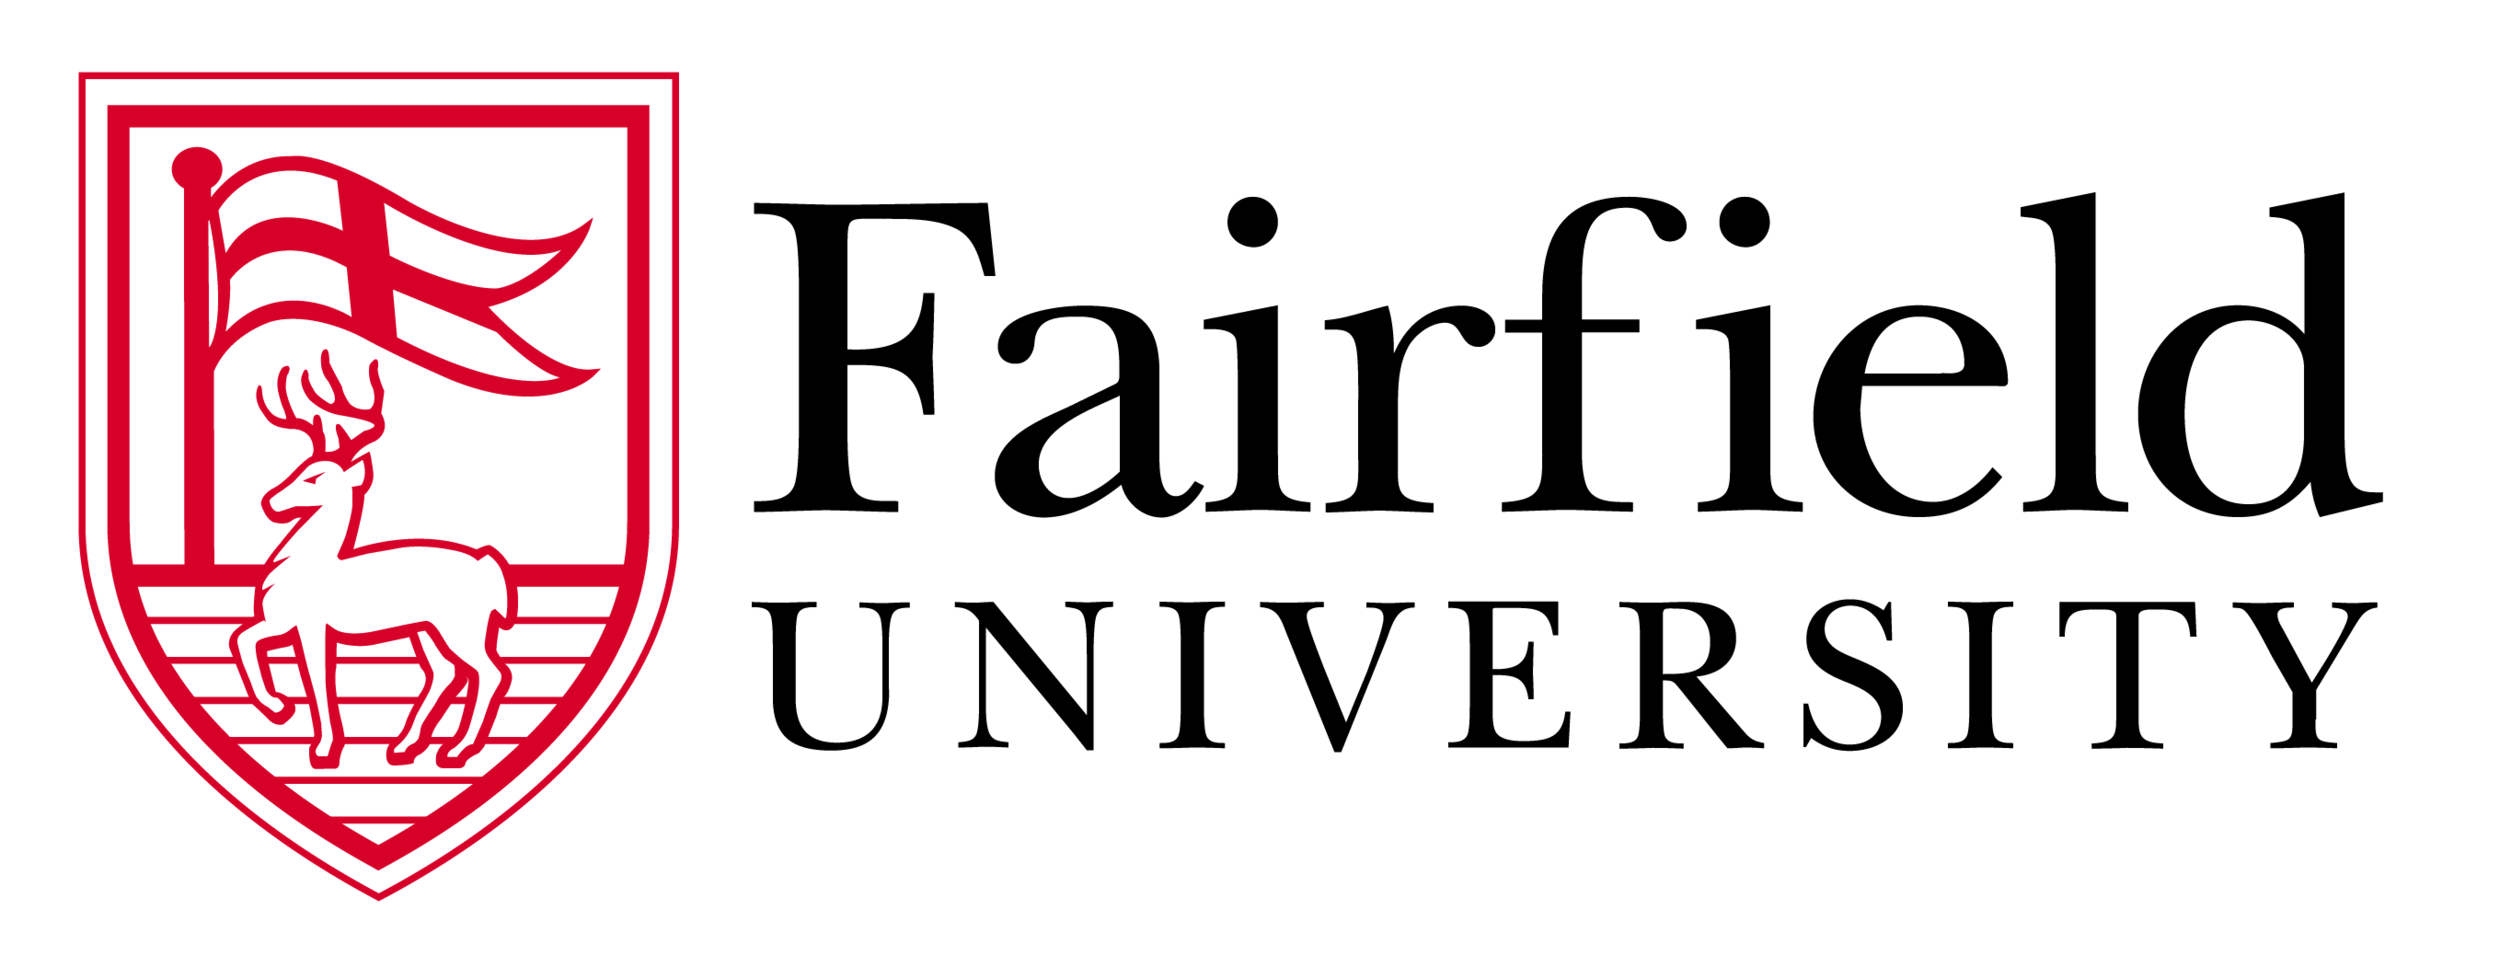 fairfield-university-vector-logo-01.png